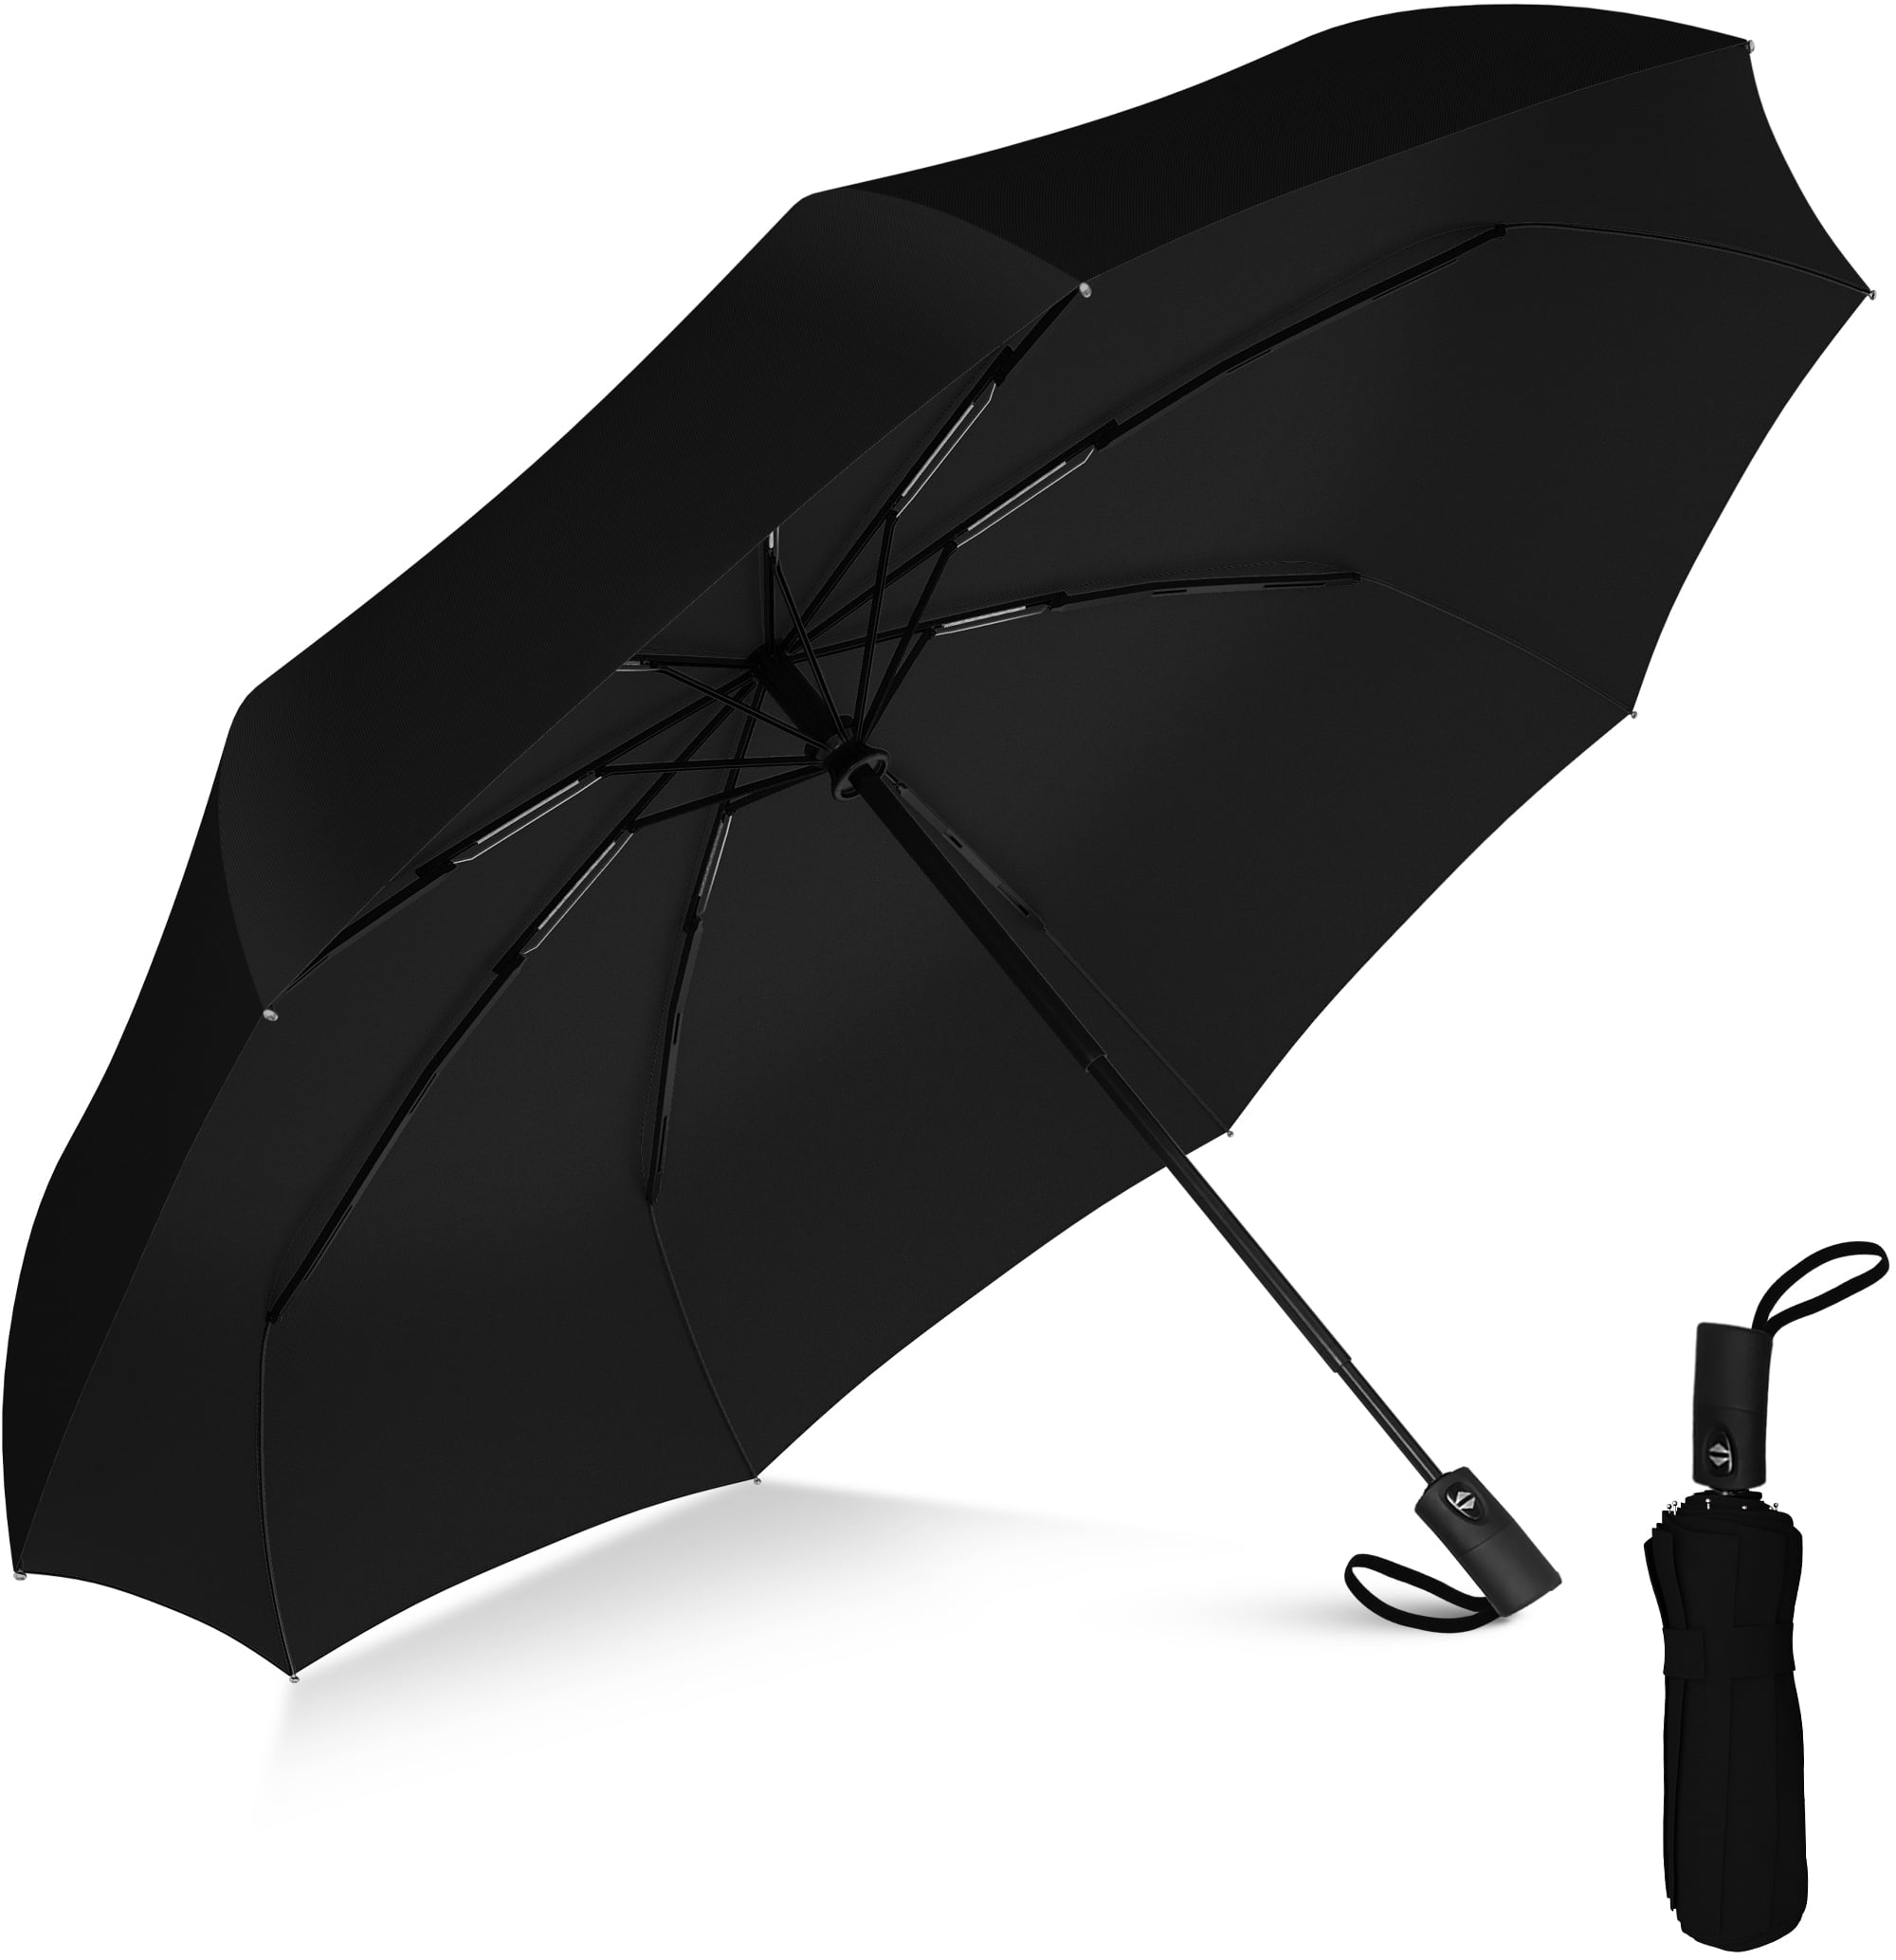 Custom Indiana State Flag Compact Travel Windproof Rainproof Foldable Umbrella